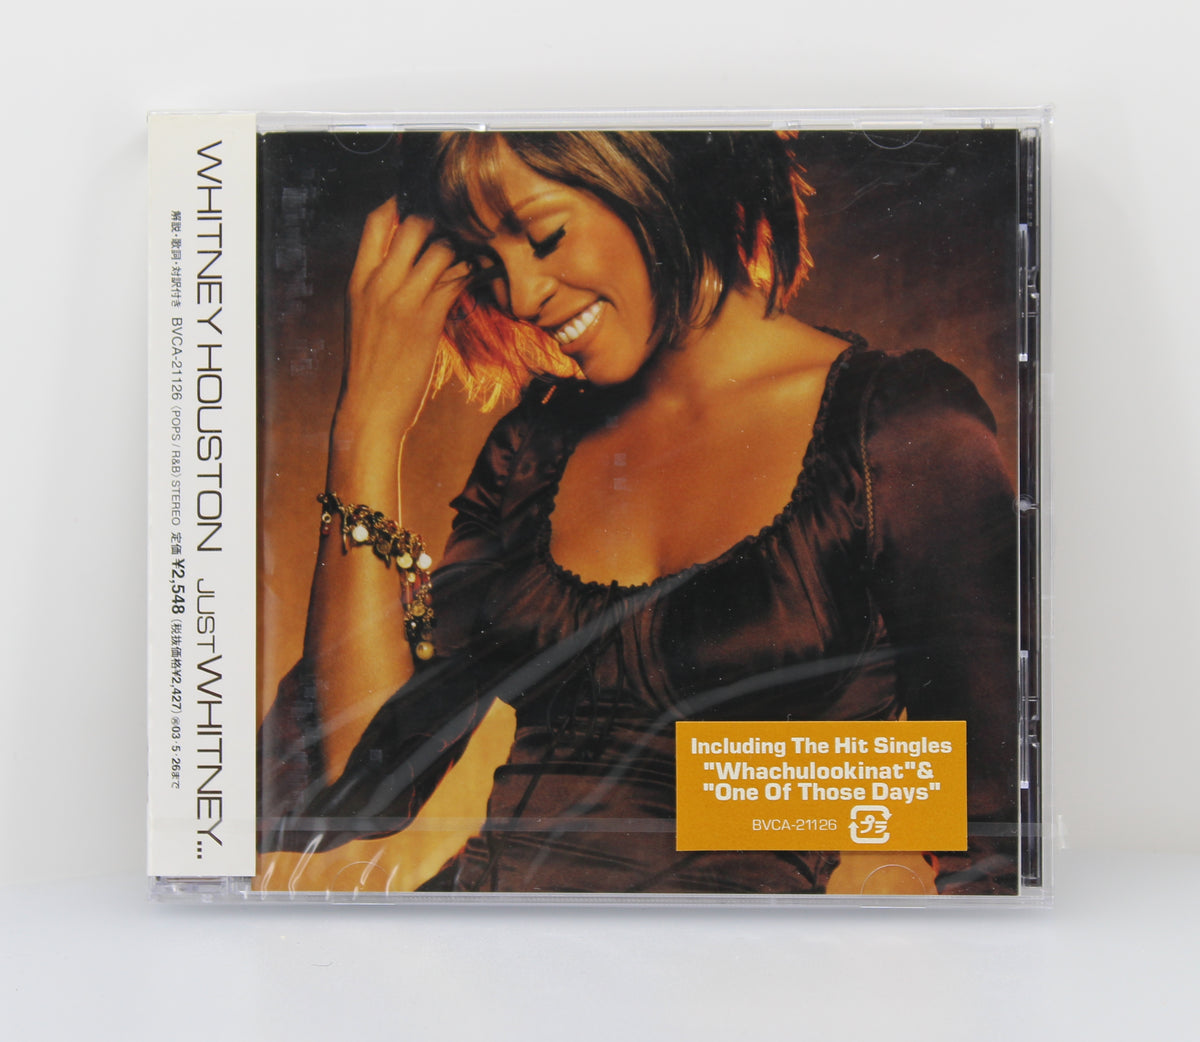 Whitney Houston – Just Whitney..., CD Album, Japan 2002